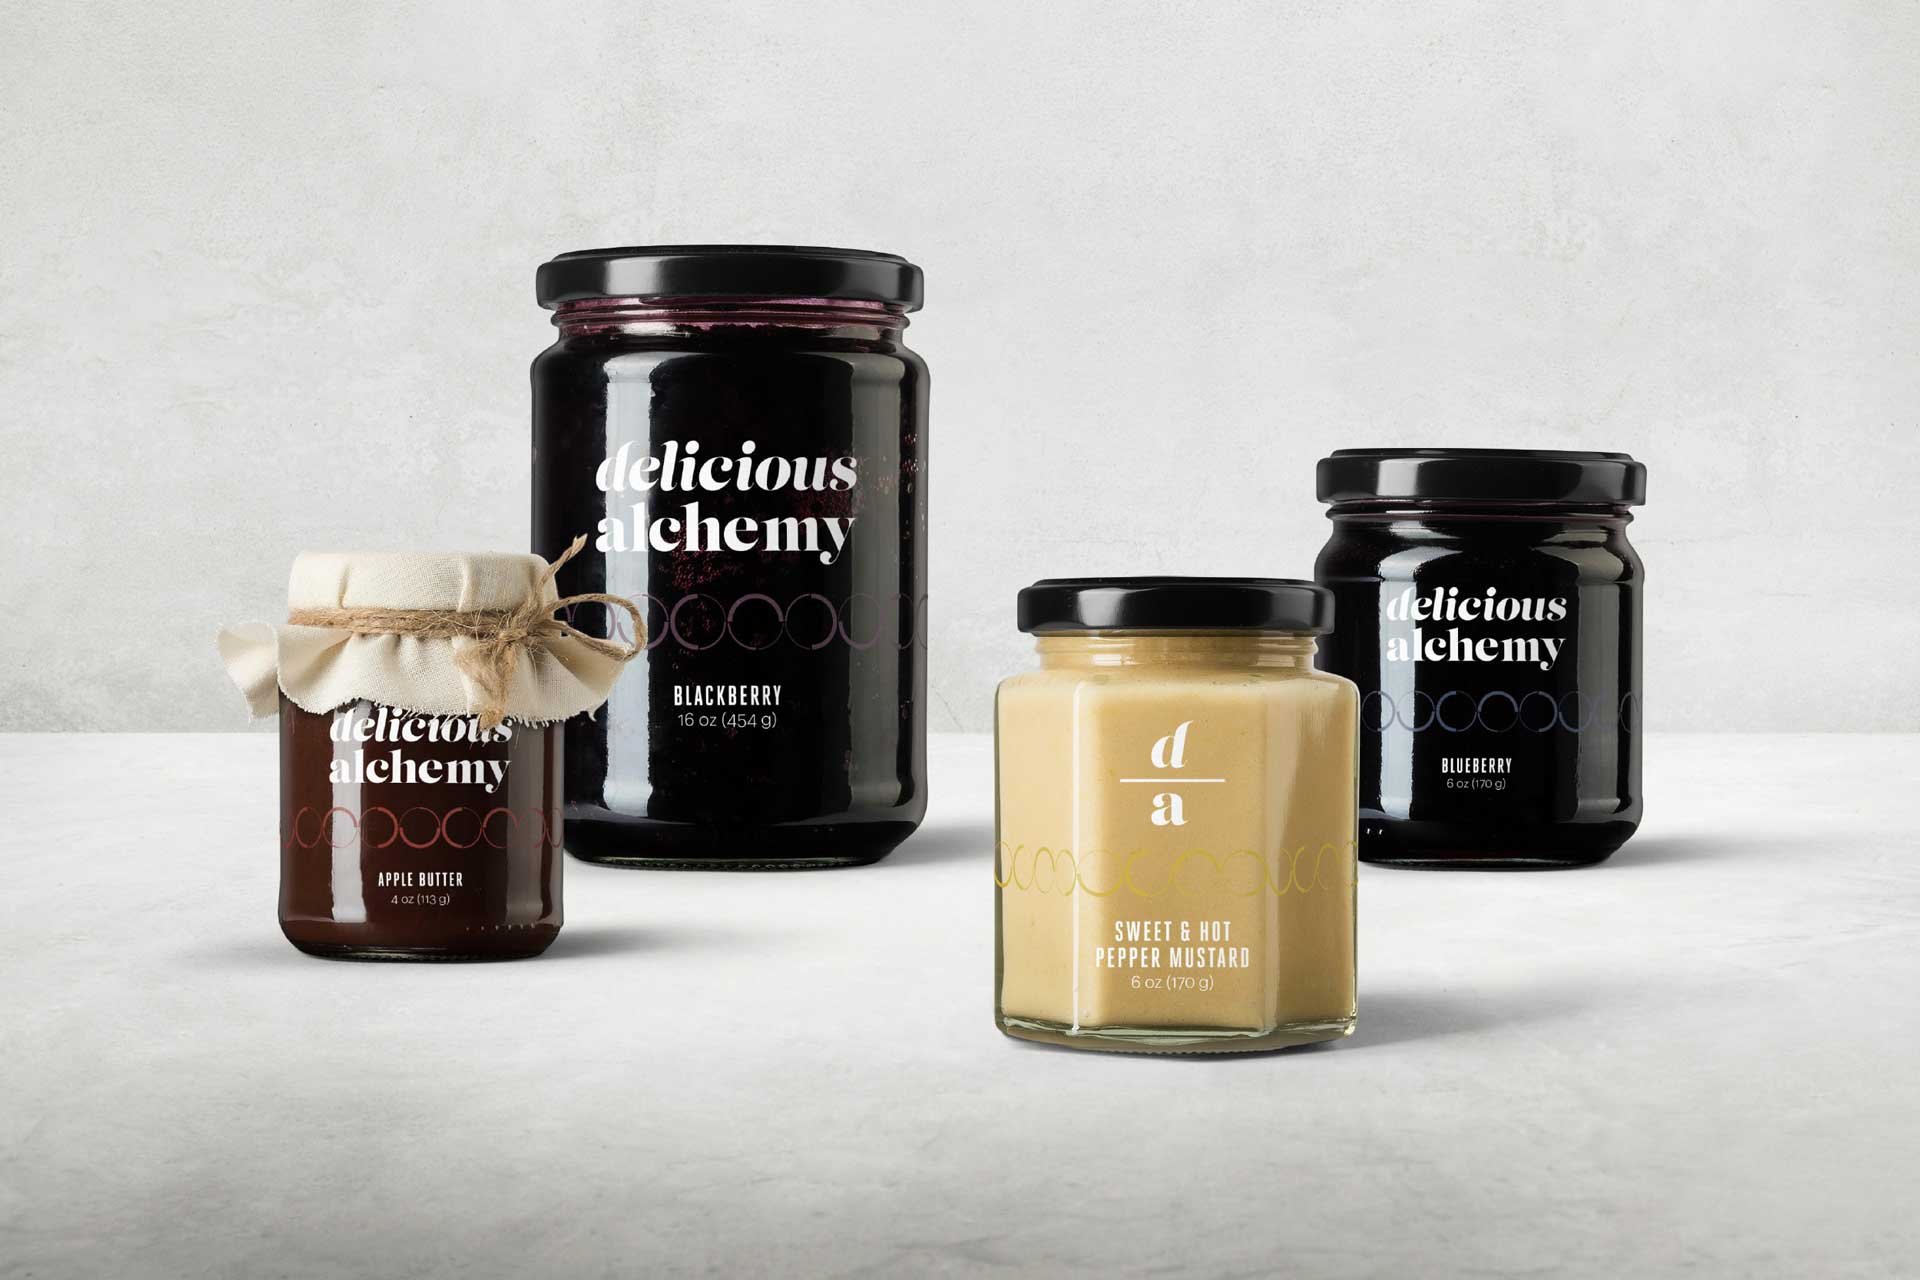 interval-llc-cullen-delicious-alchemy-jam-mustard-jars-carousel.jpg